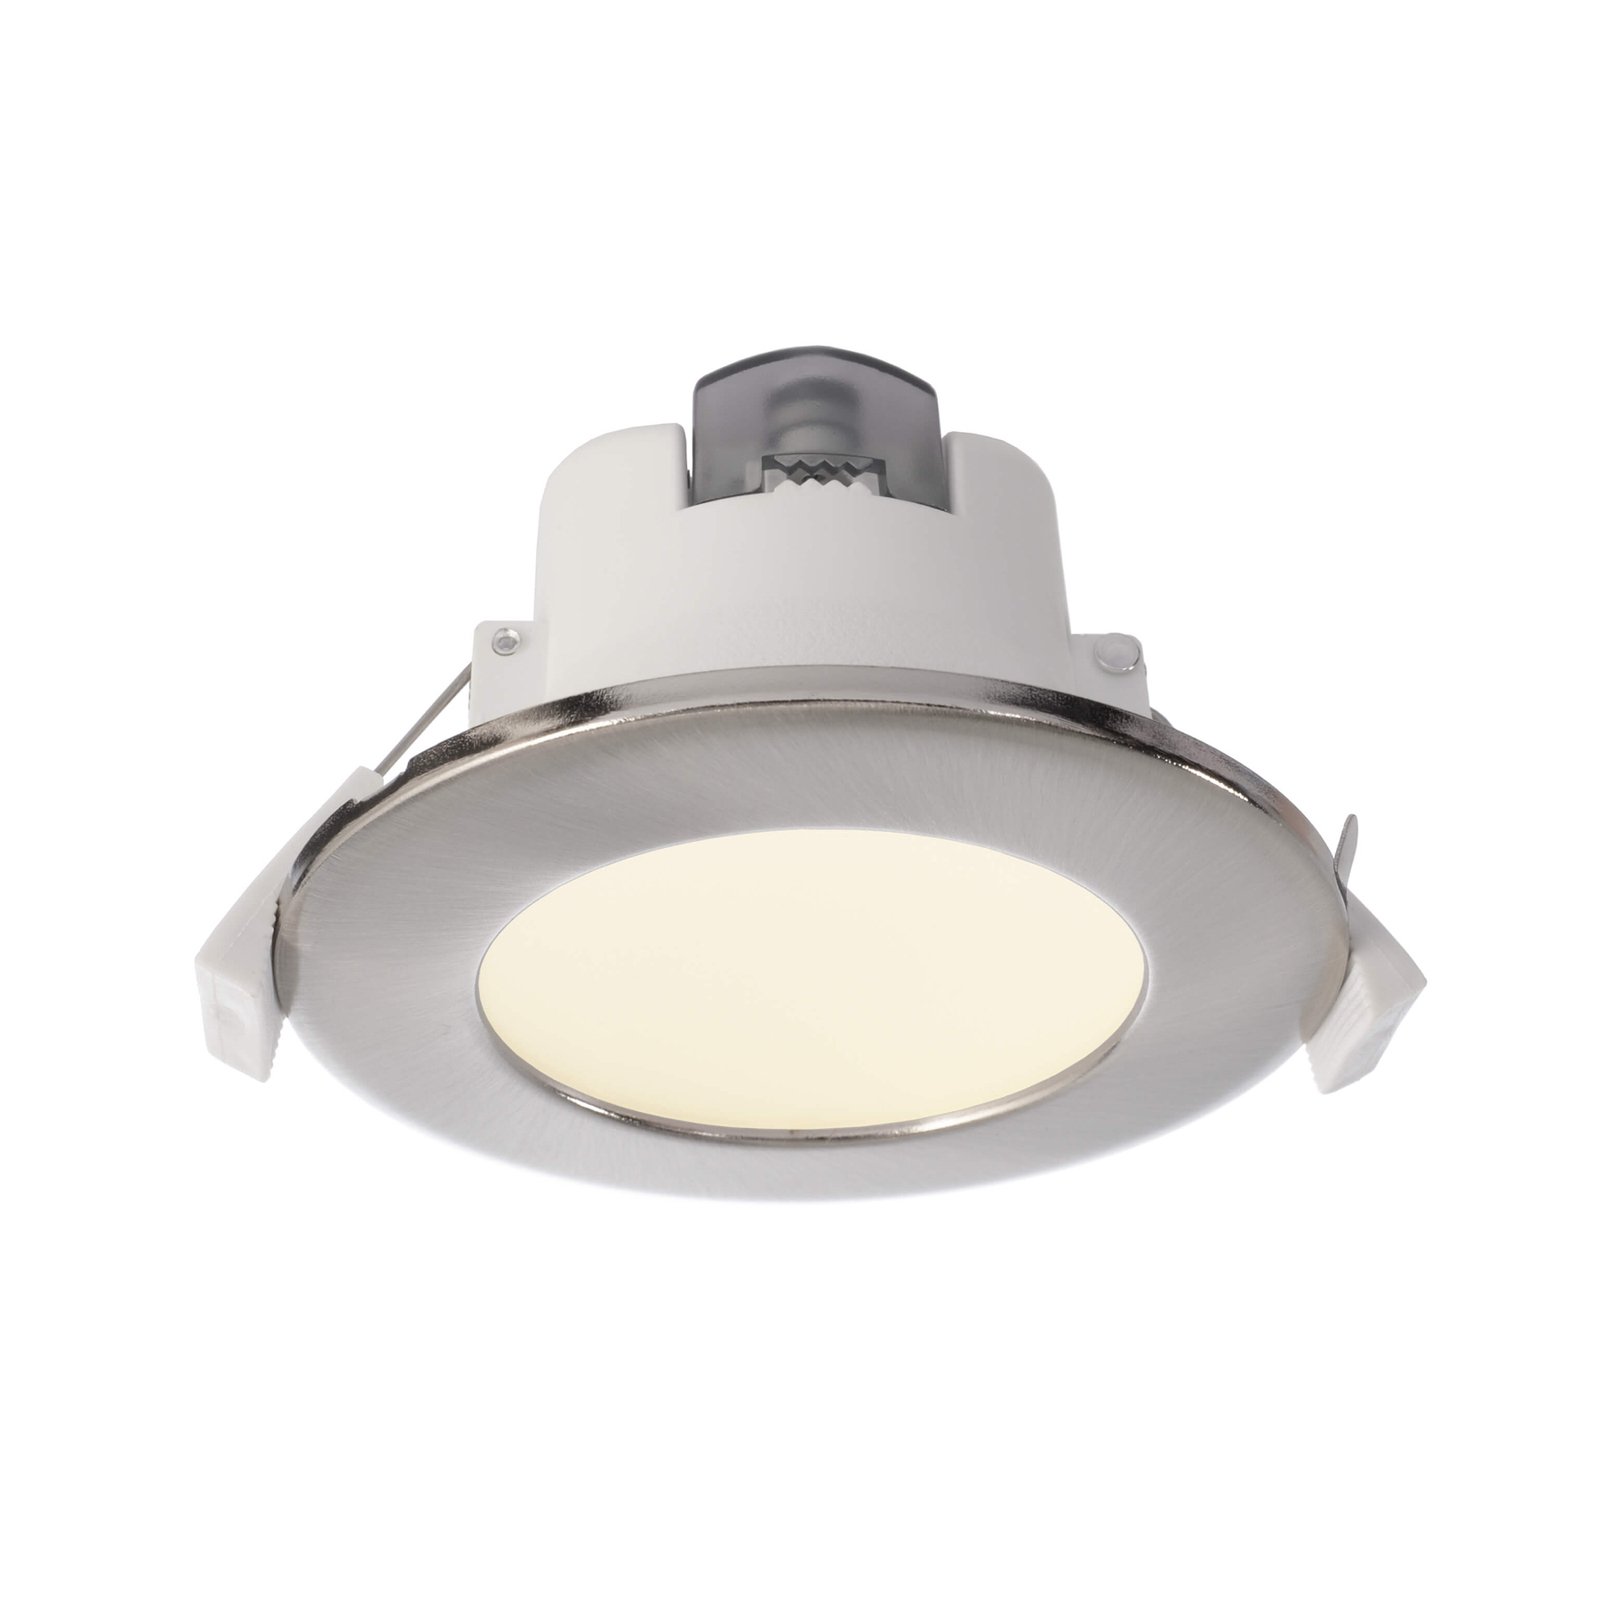 Downlight LED Acrux 68, bianco, Ø 9,5 cm